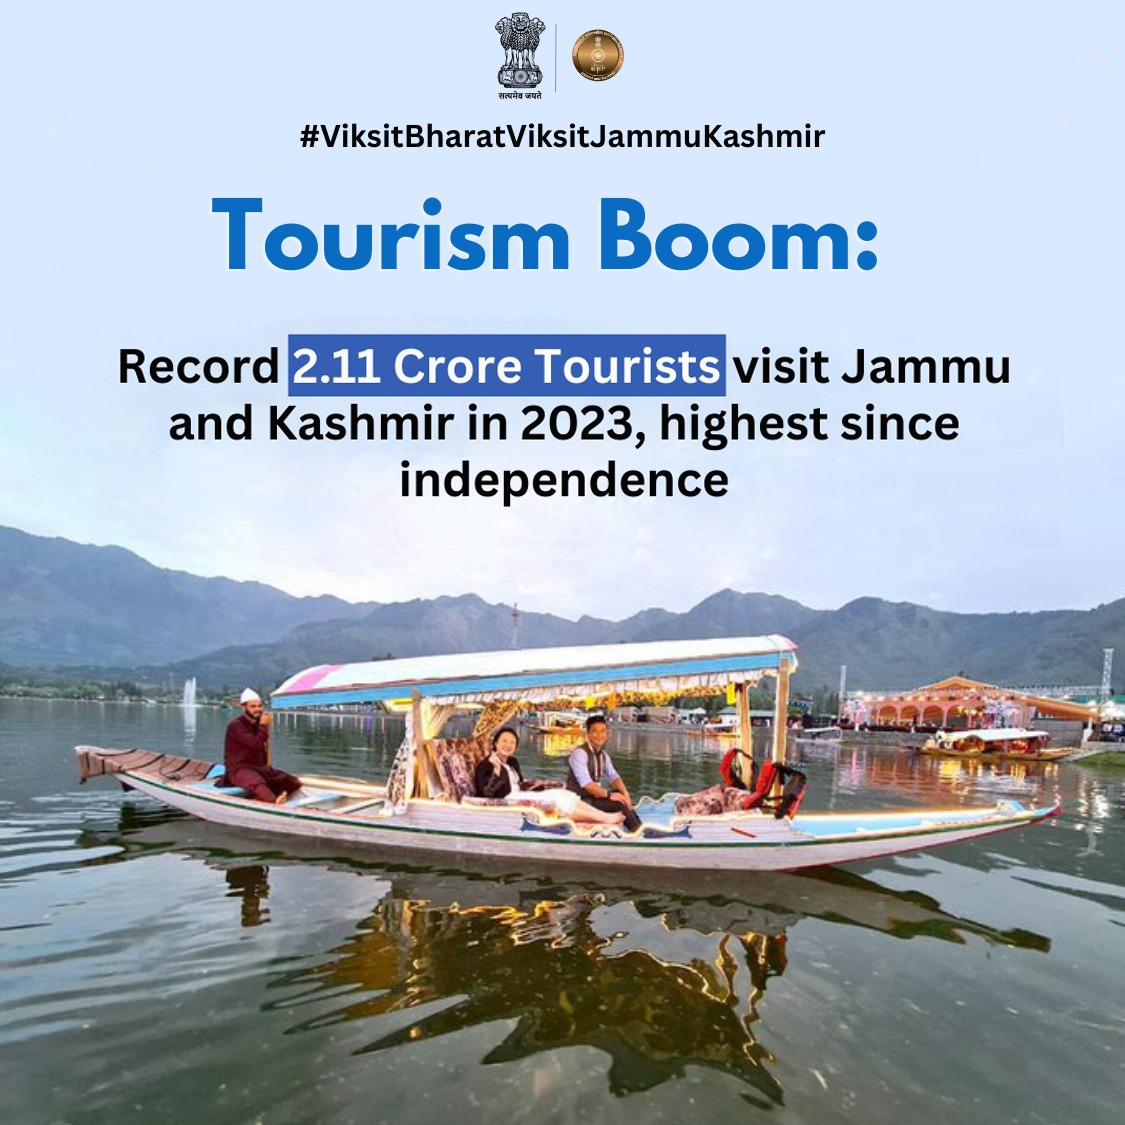 #ViksitBharatViksitJnK Tourism promotion in Jammu and Kashmir, India. Record number of 2.11 cr. tourists visited the region in 2023. #PminKashmir @PMOIndia @HMOIndia @MIB_India @OfficeOfLGJandK @PIB_India @DDNewslive @airnewsalerts @PIBSrinagar @CBCJammuKashmir @diprjk